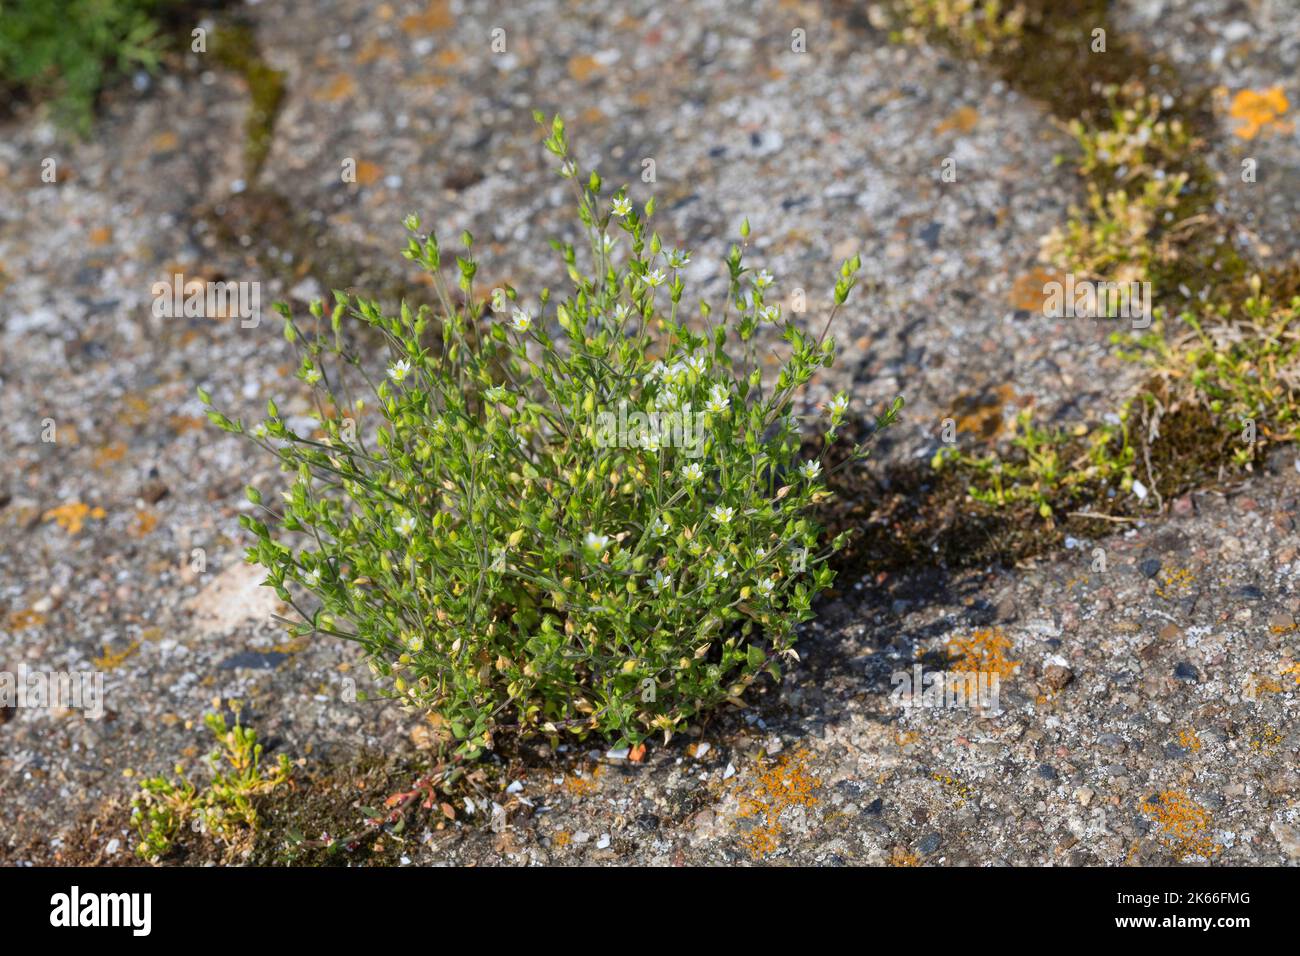 thyme-leaved sandwort, thyme-leaf sandwort (Arenaria serpyllifolia), grows in paving gaps, Germany Stock Photo